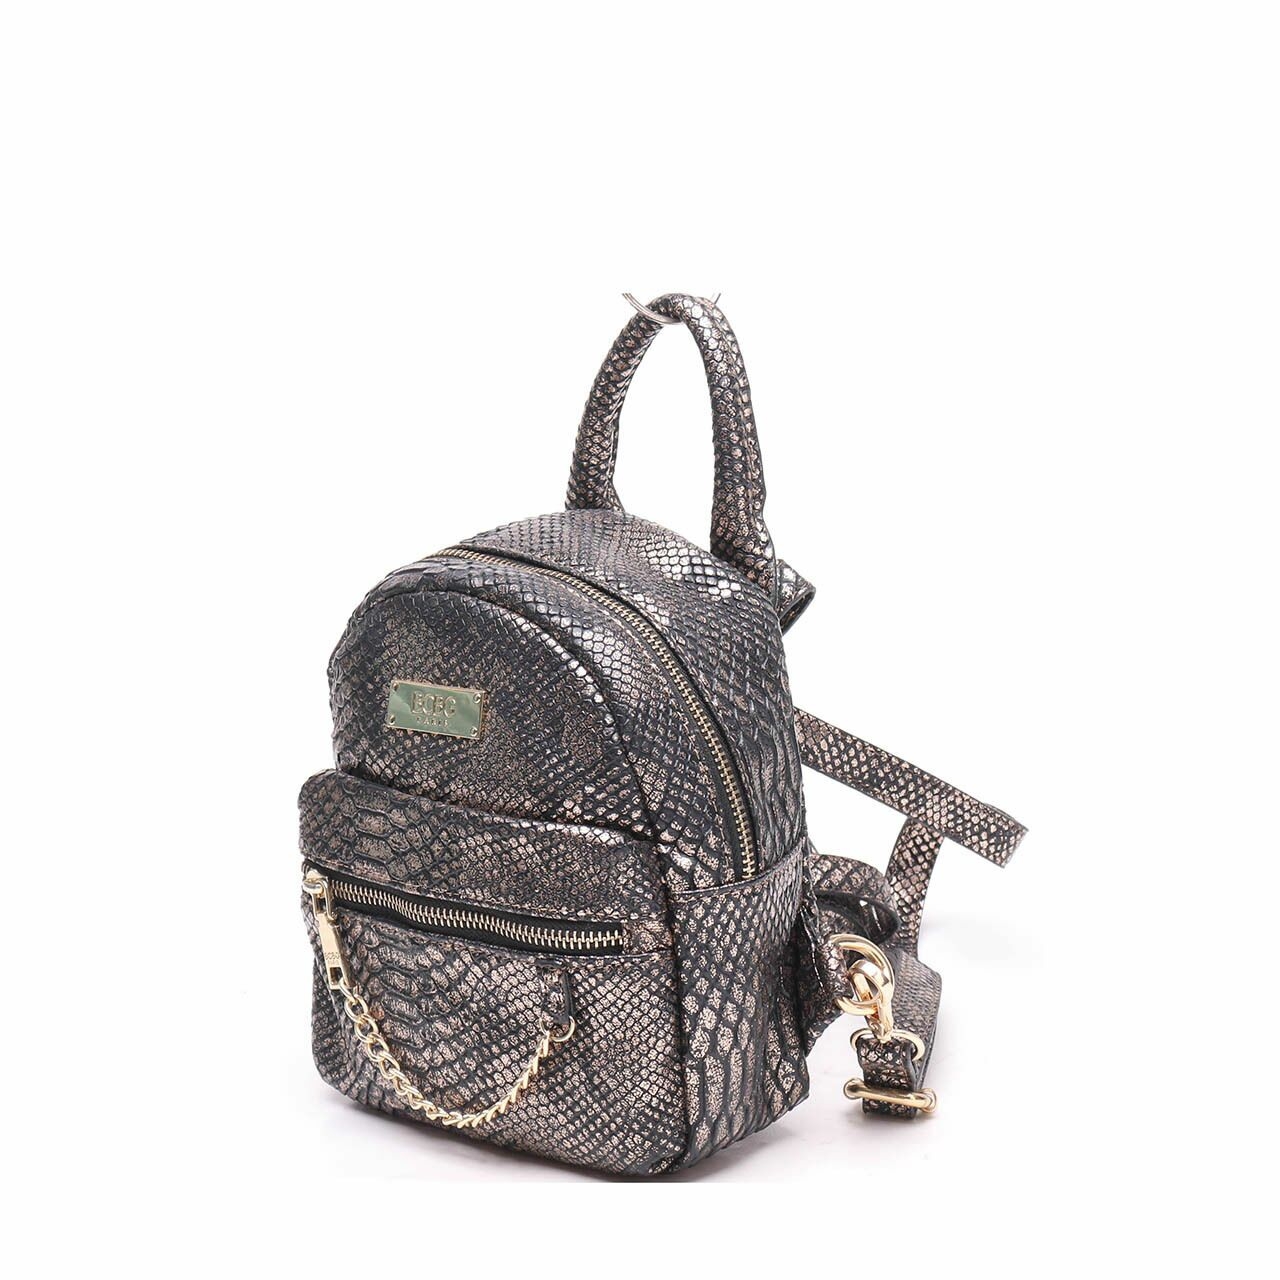 BCBG Paris Bronze Small Backpack